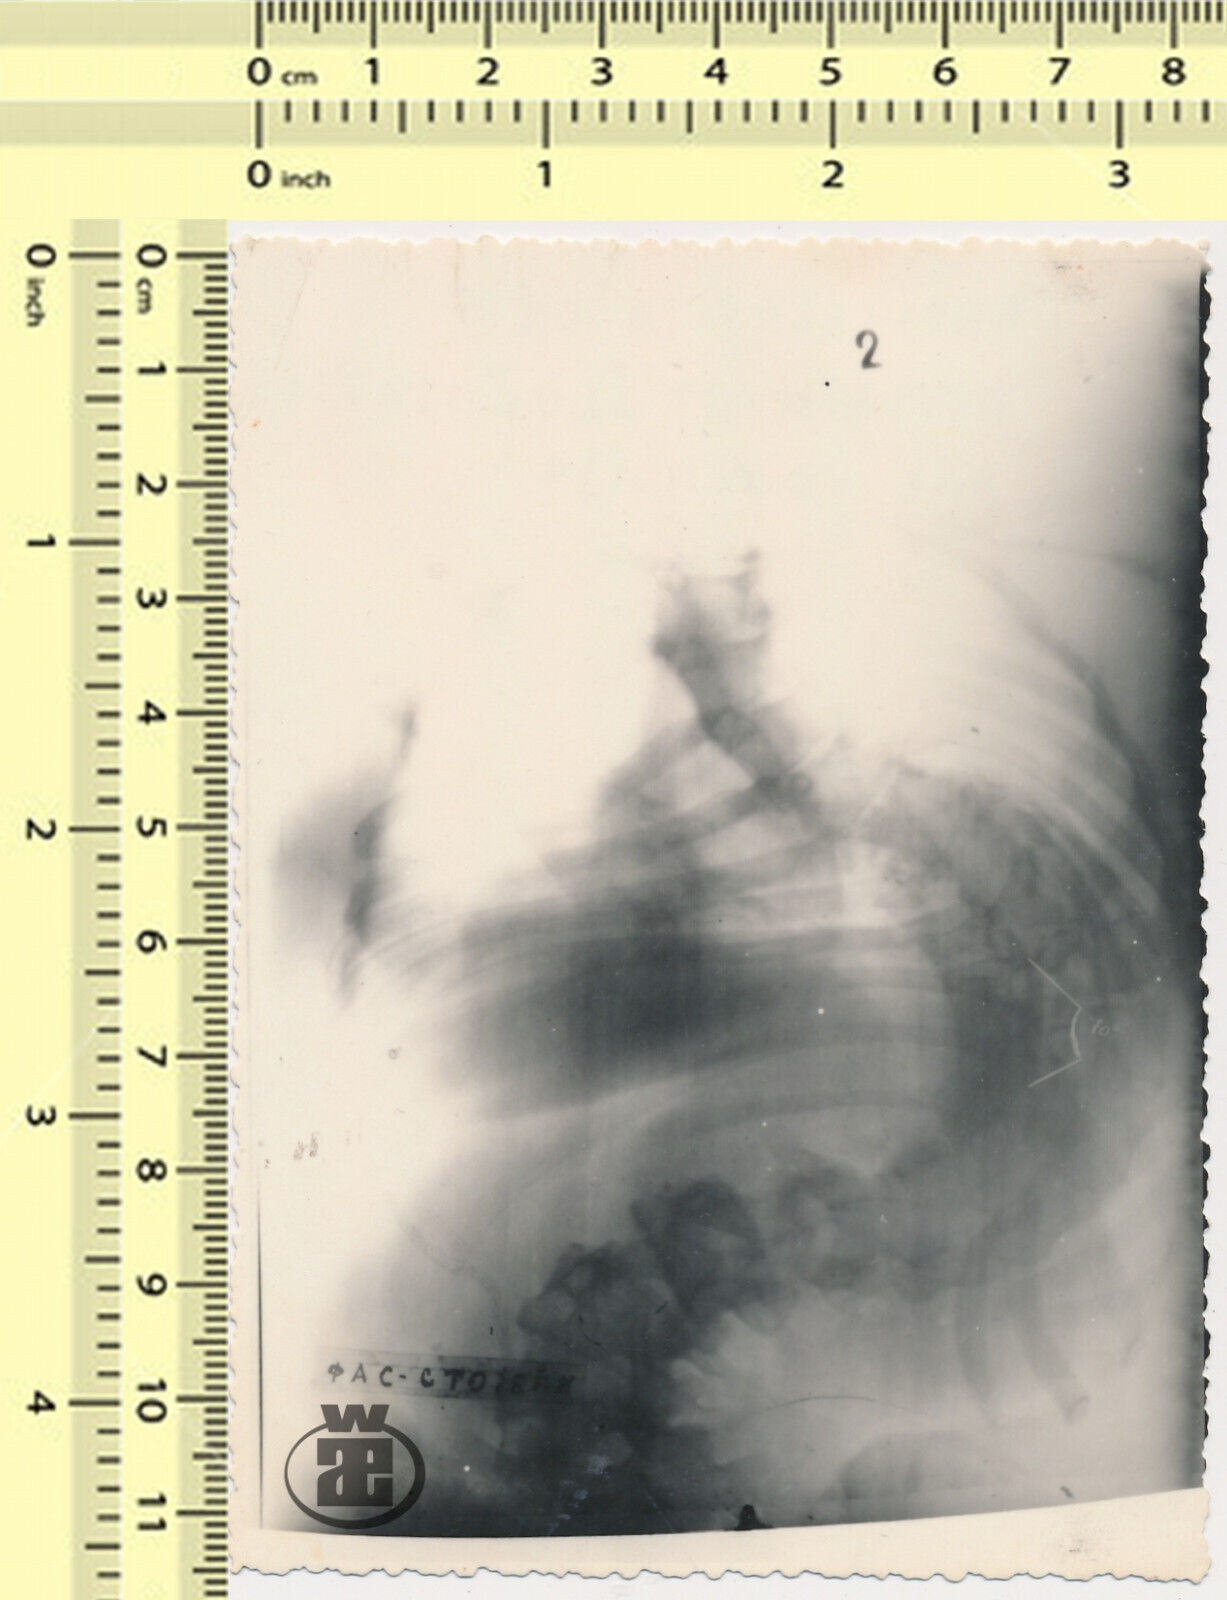 160 Radiography Deformity X-Ray Abstract Surreal Spine Bones vintage photo orig.